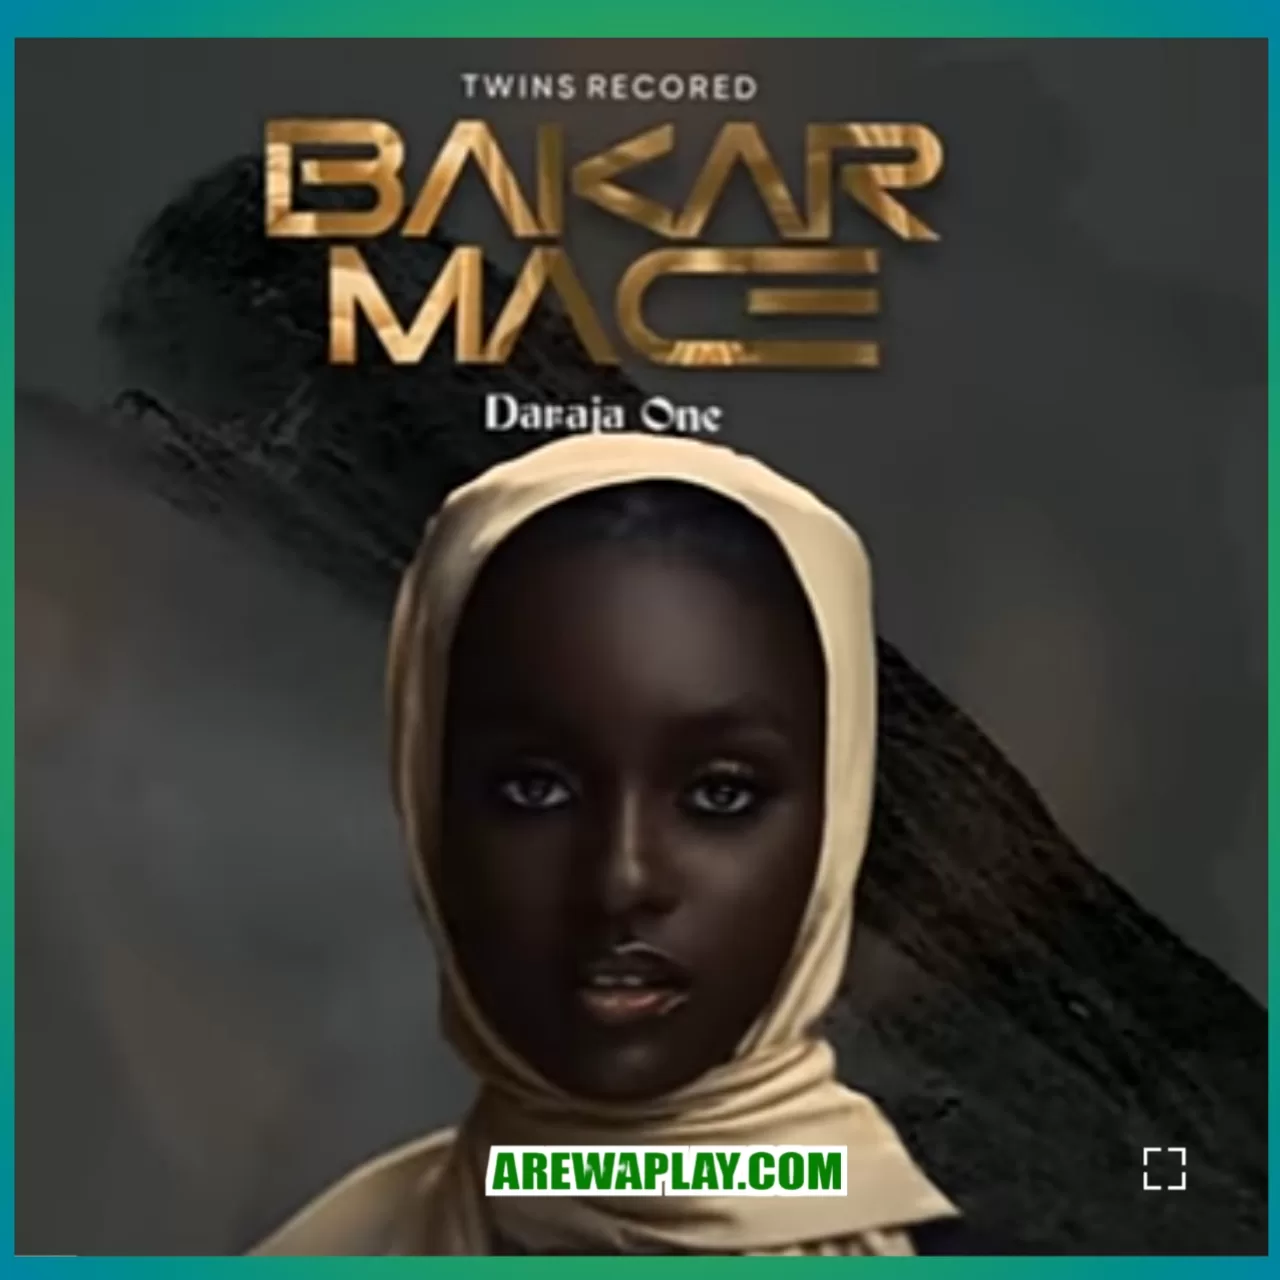 Daraja One - Bakar Mace Mp3 Download